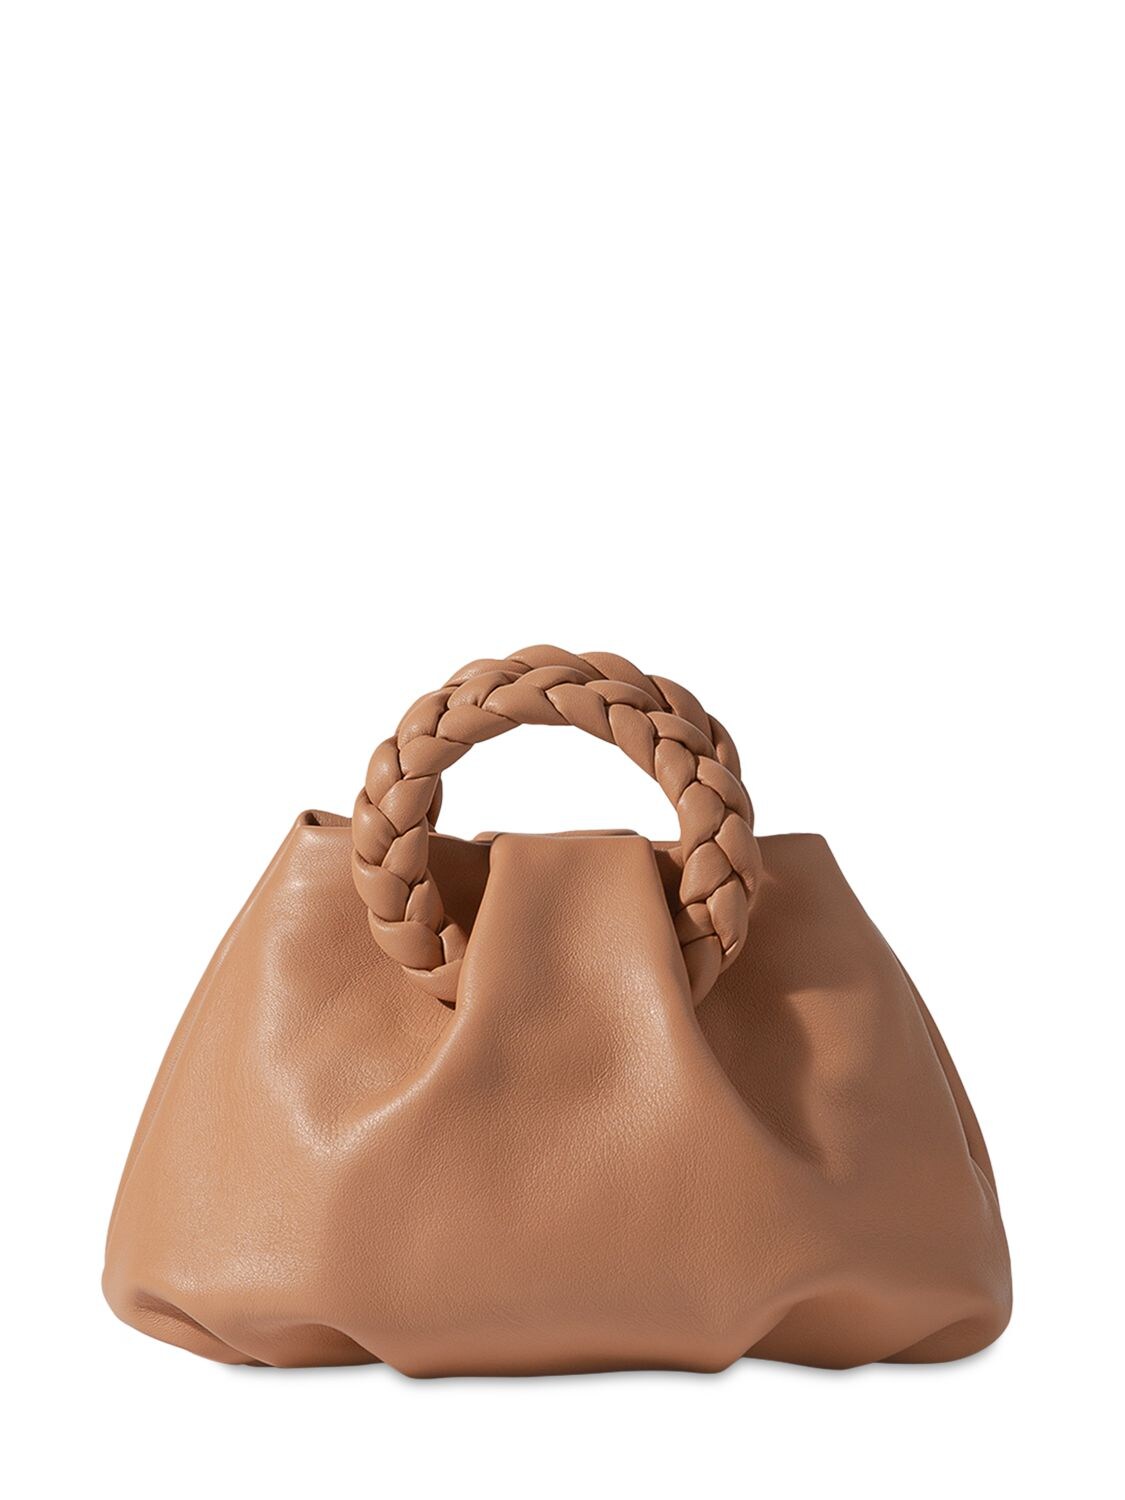 Totes bags Hereu - Bombon braided handle leather handbag - BOMBONCREAM